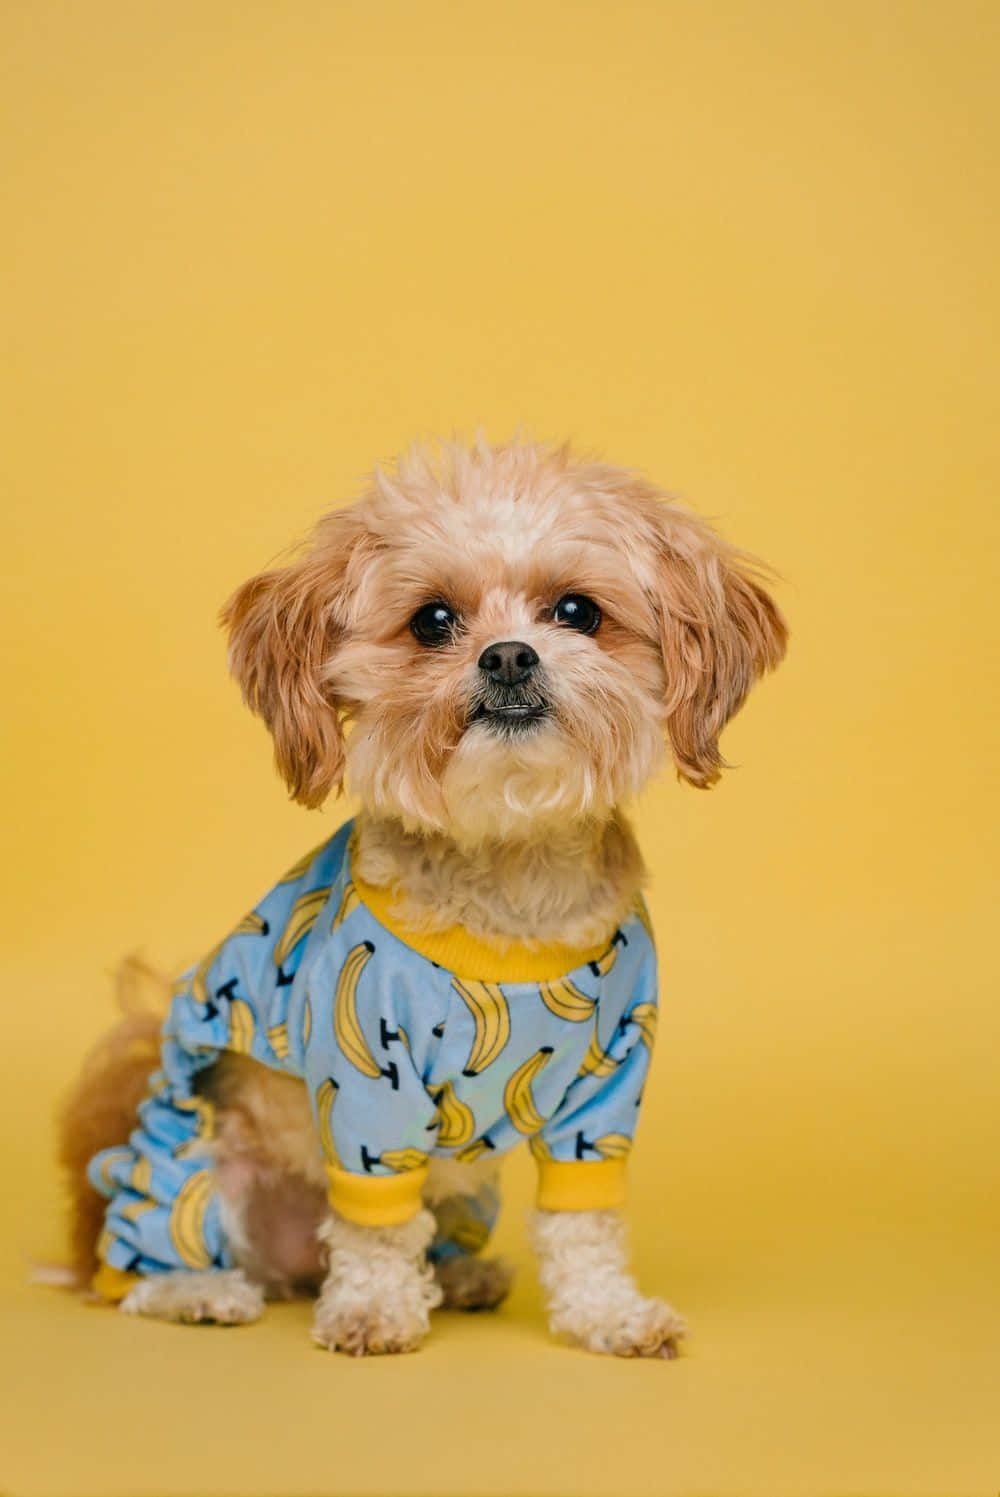 A Small Dog Wearing A Blue And Yellow Pajama Set